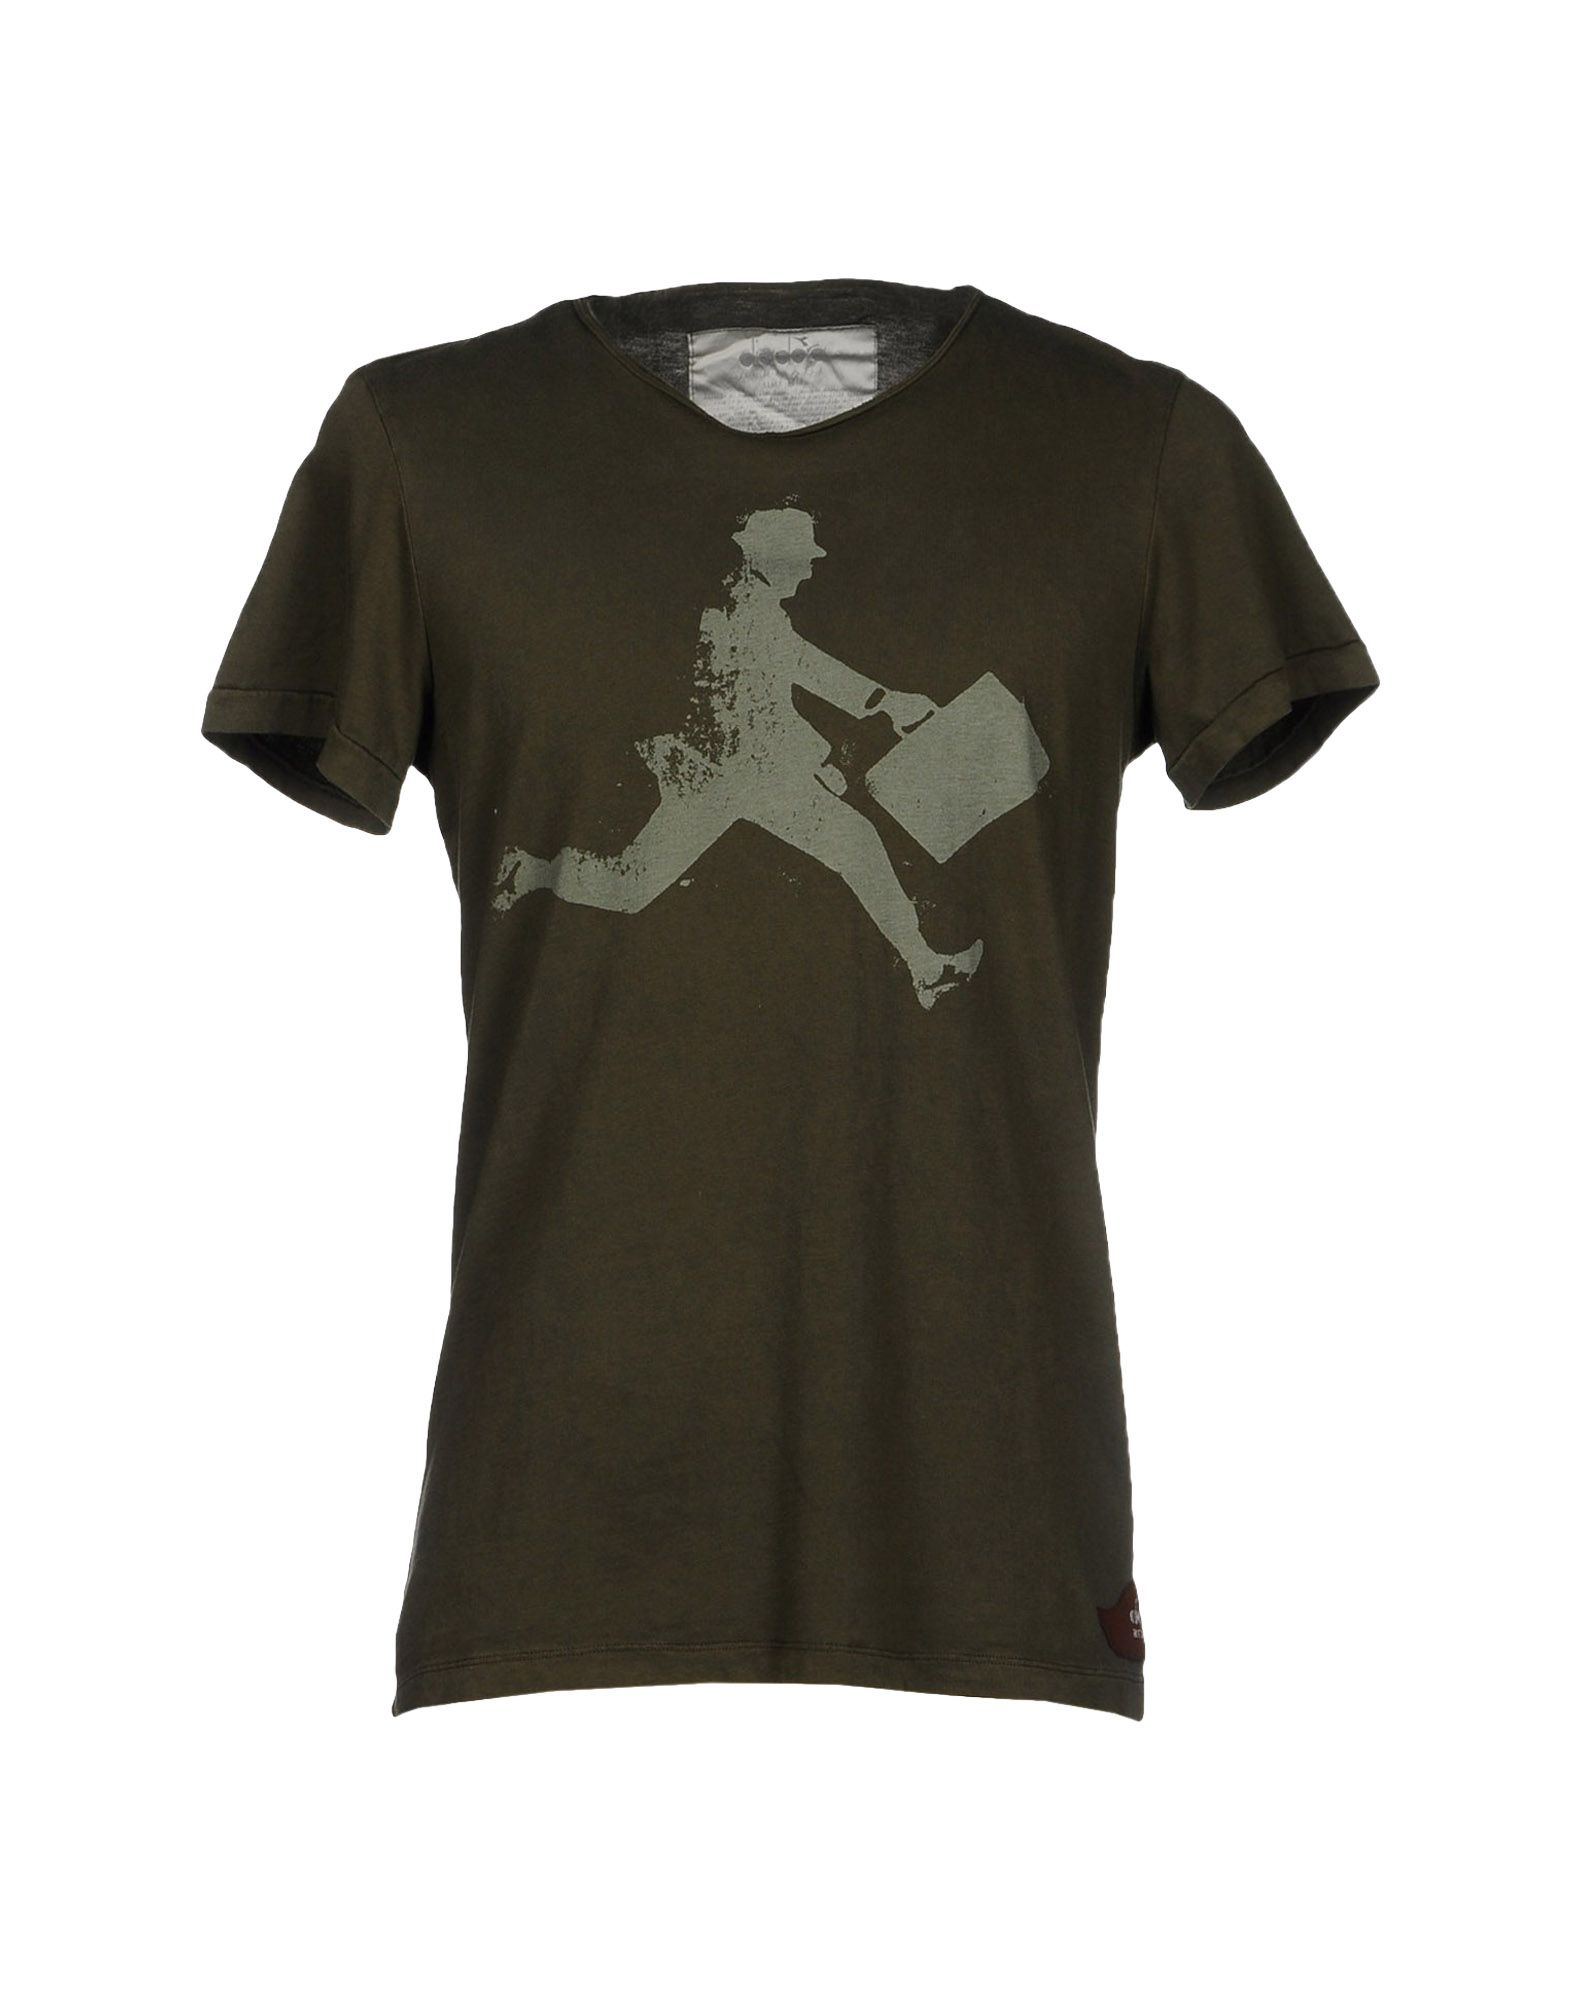 Diadora Cotton T-shirt in Dark Green (Green) for Men - Lyst